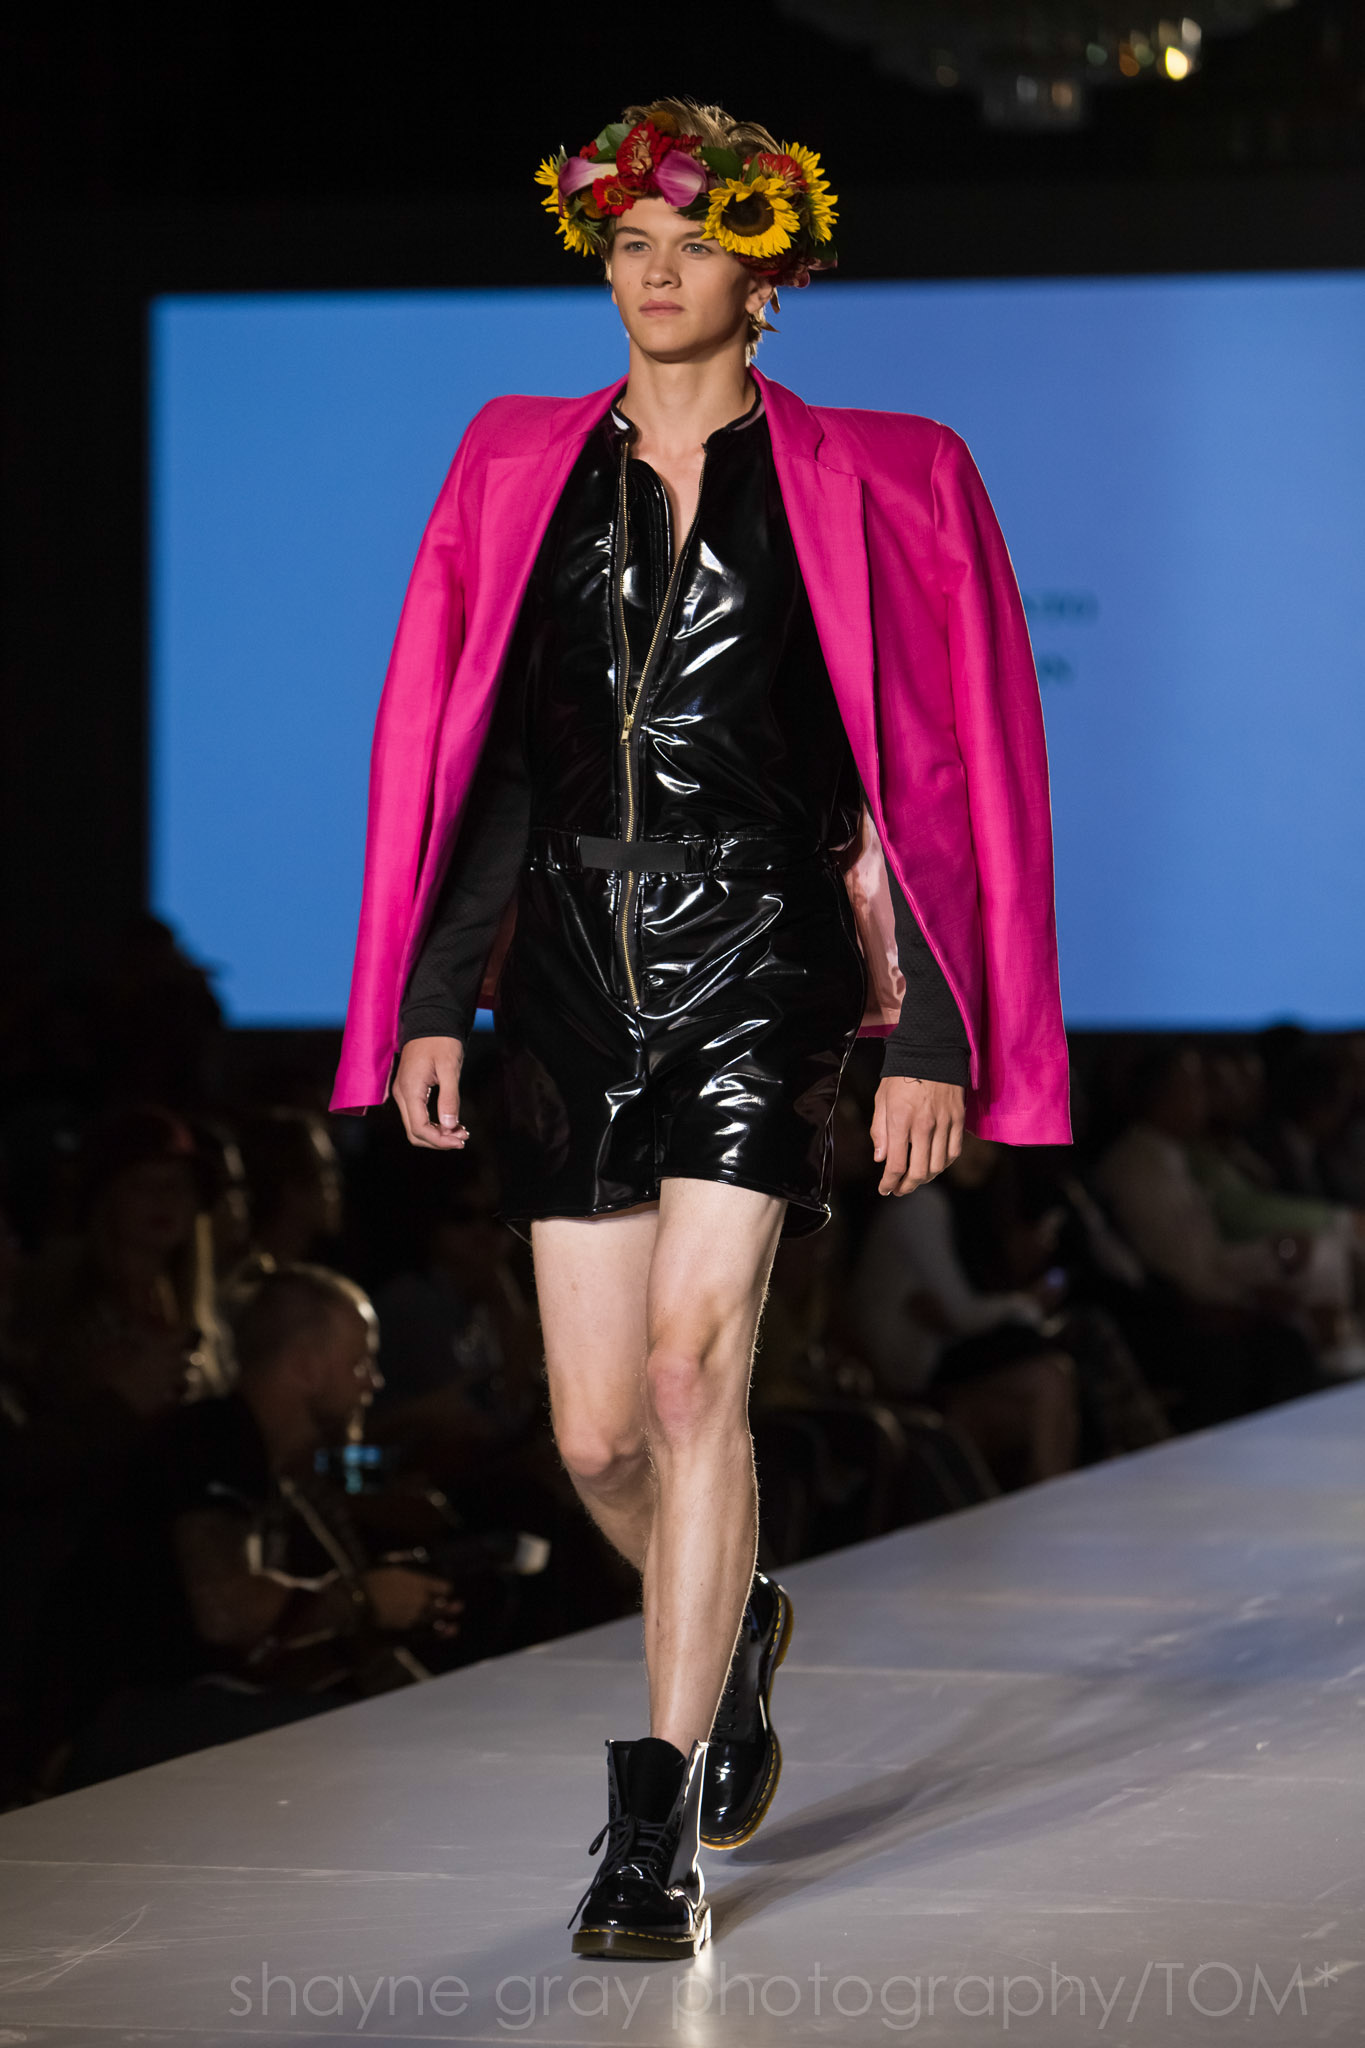 Shayne-Gray-Toronto-men's-fashion_week-TOM-worth-by-david-c-wigley-6368.jpg